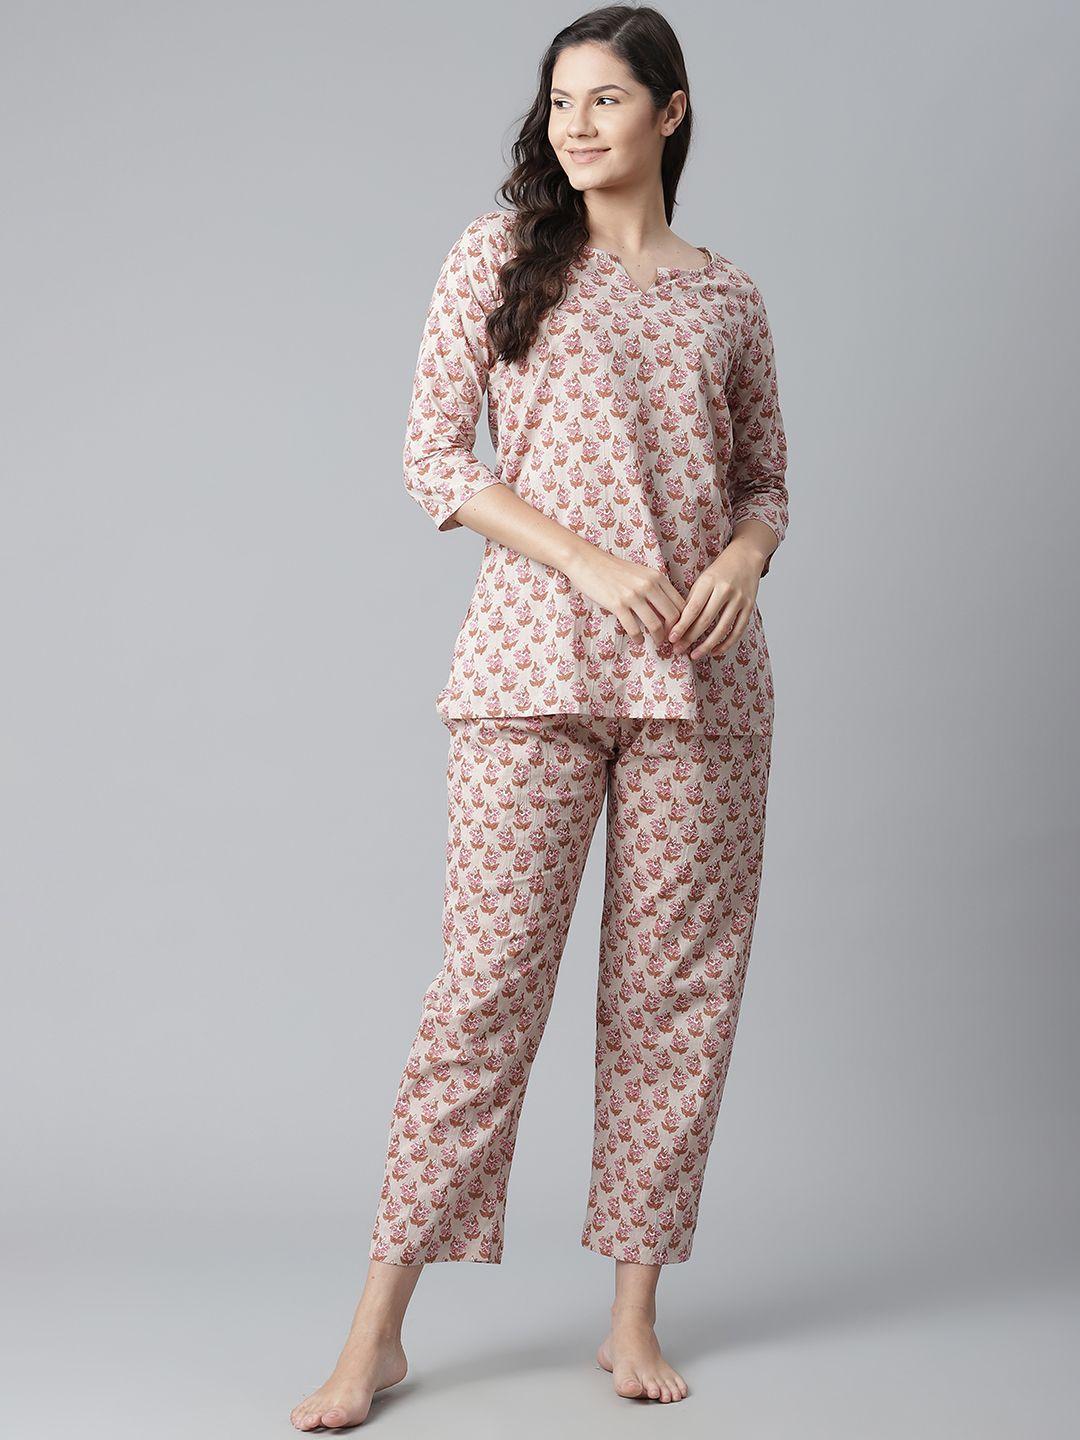 divena women white & pink printed cotton night suit